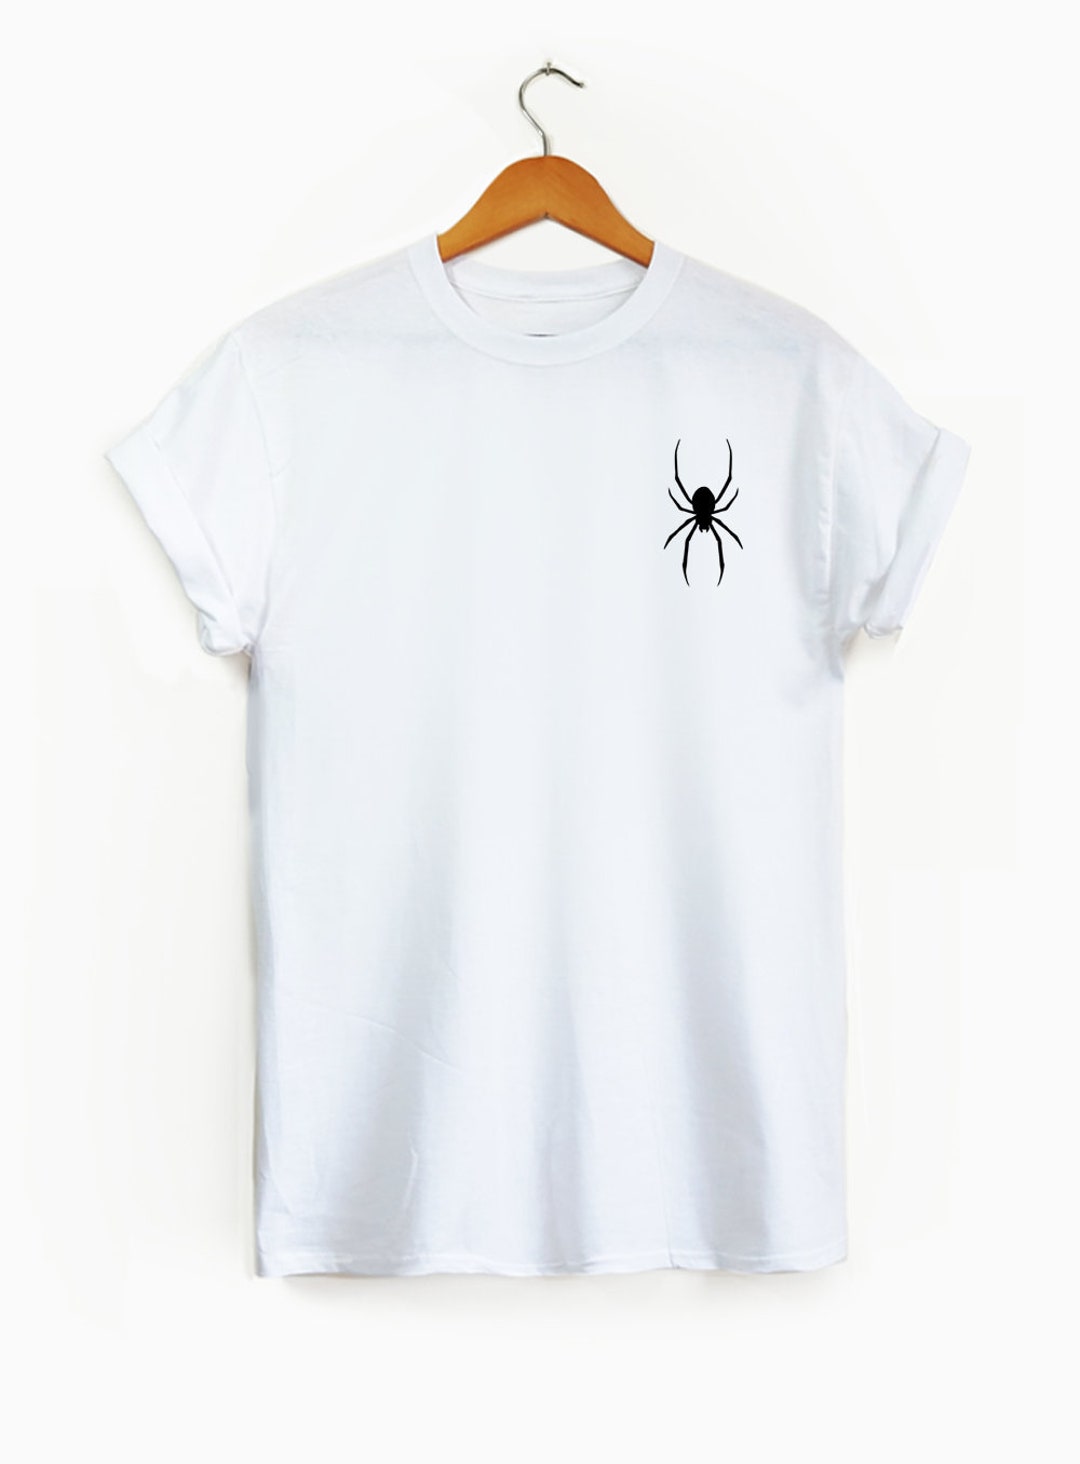 Creepy Spider Pocket Shirt Cute Shirt Pocket Tee Halloween - Etsy